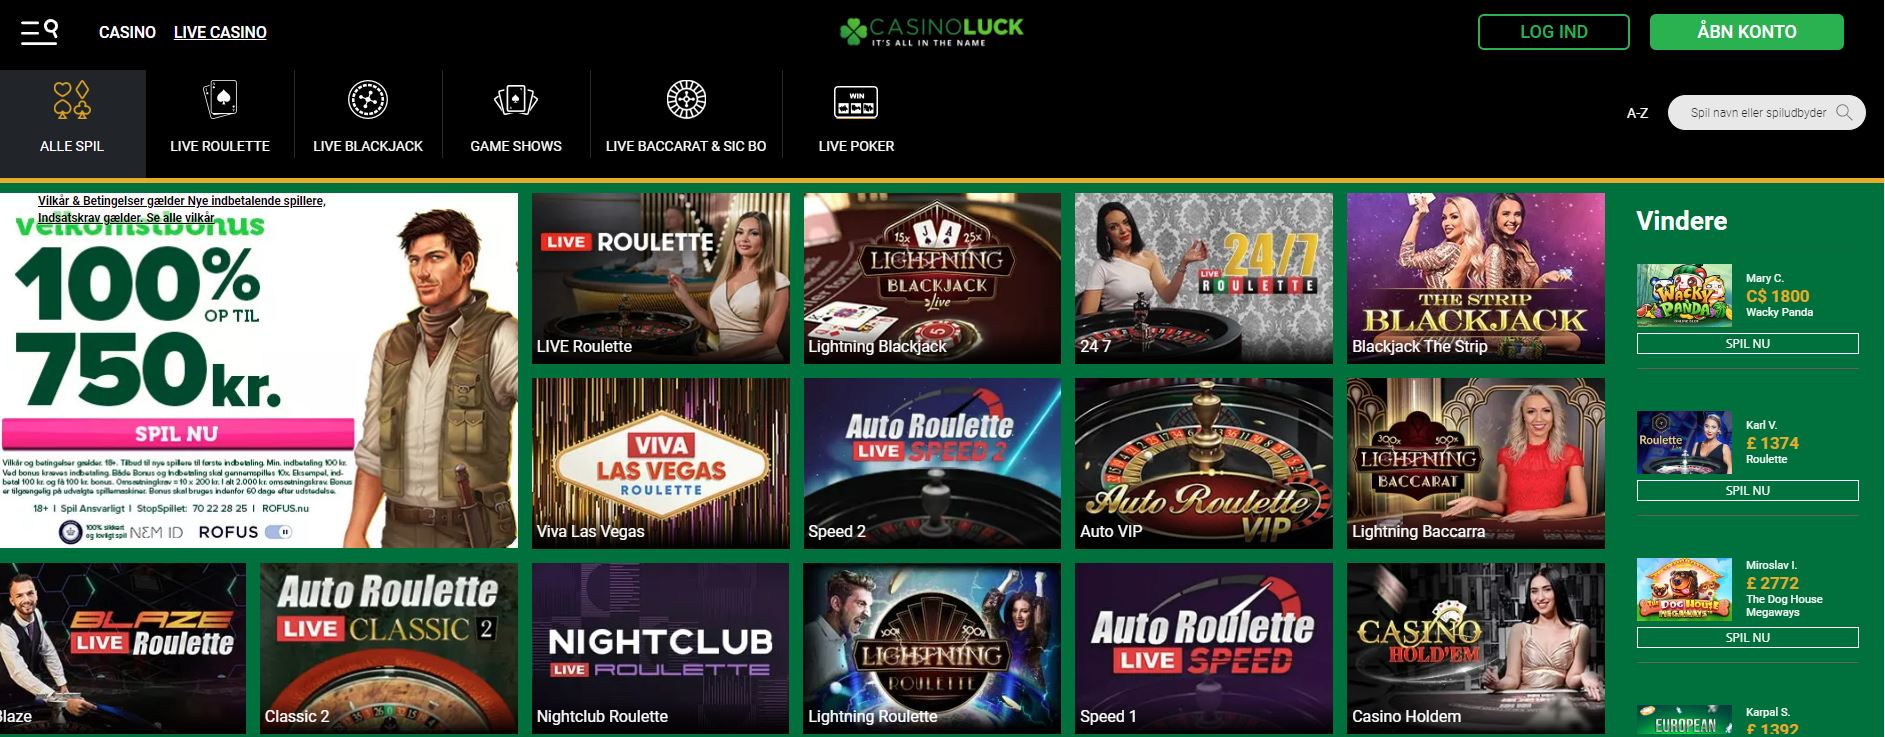 live casino casinoluck 